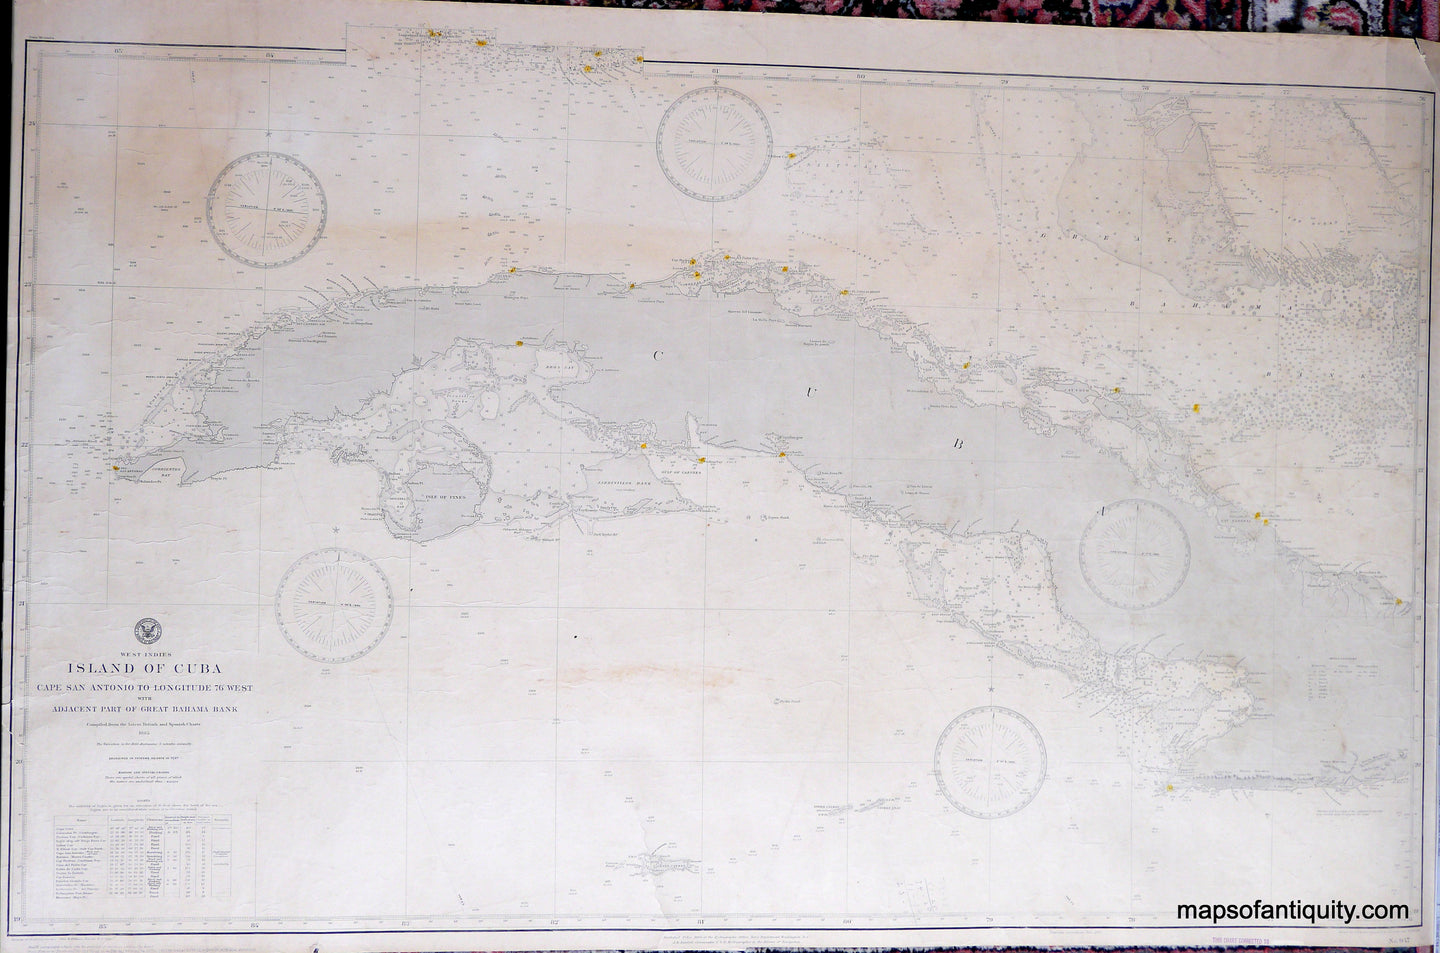 Antique-Nautical-Chart-Island-of-Cuba-Caribbean-Cuba-1885/1899-Dept.-of-Navy-Maps-Of-Antiquity